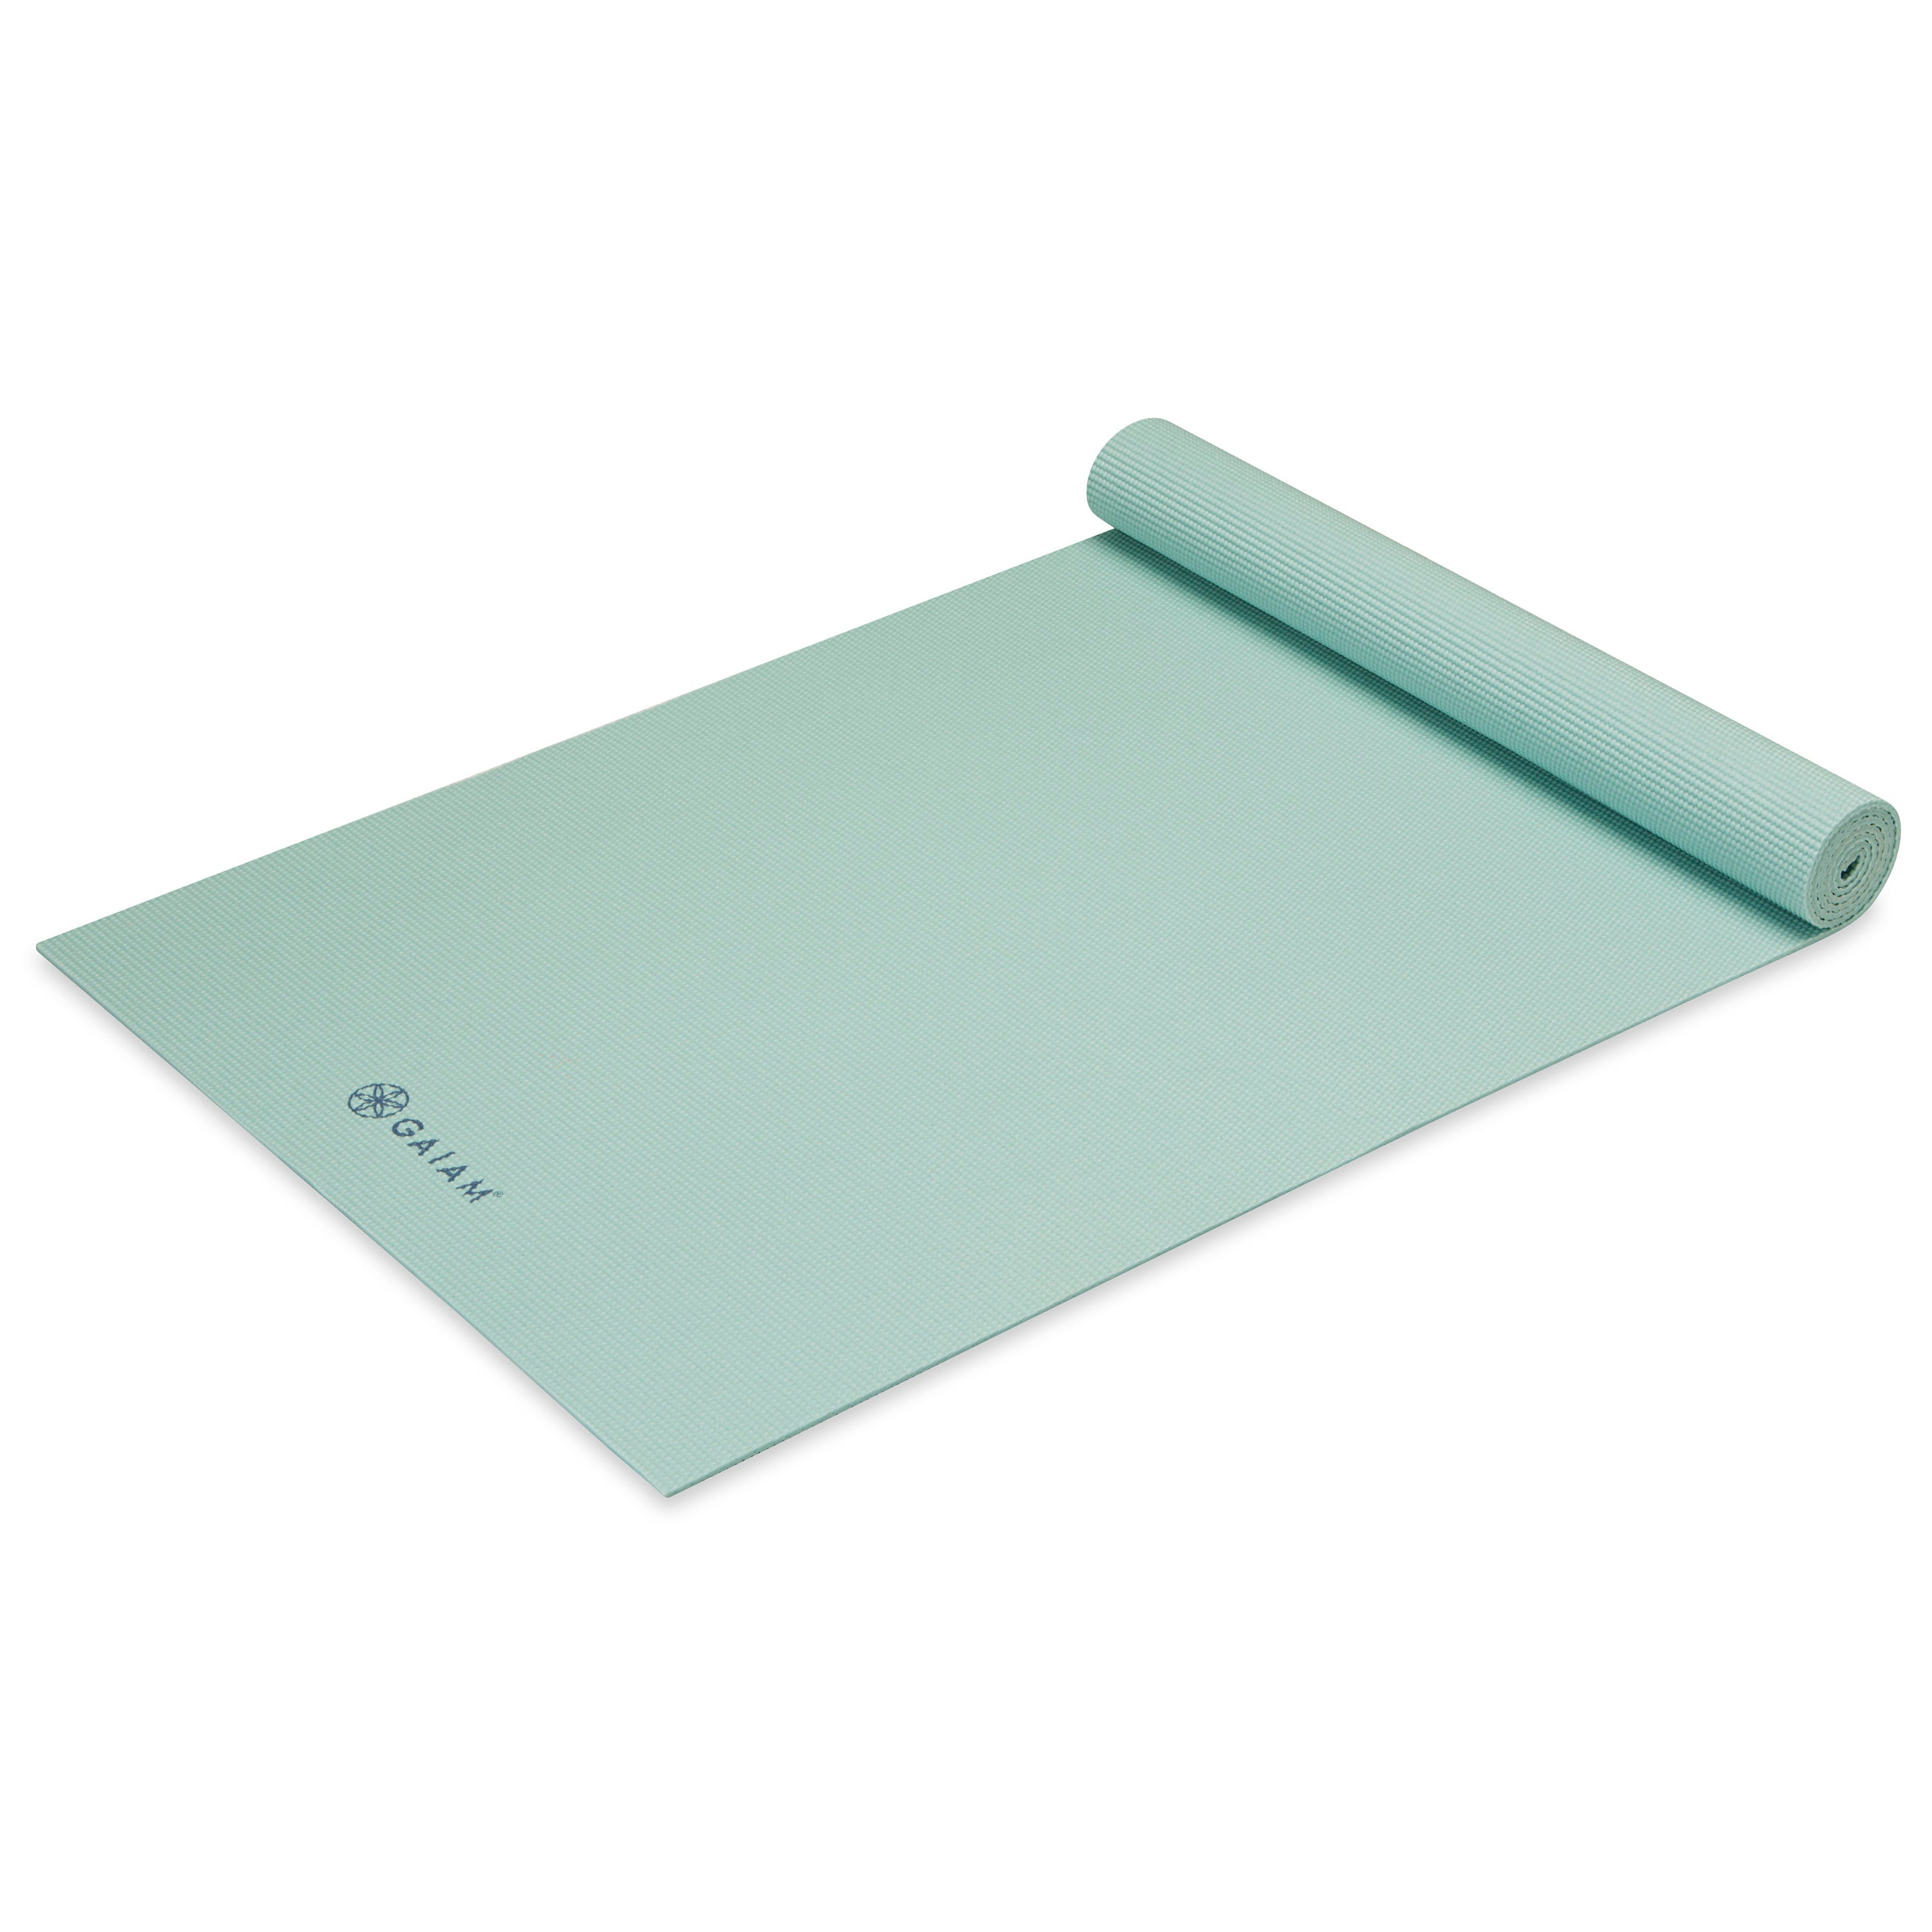 Gaiam Gaiam Deep Jade/icicle 2-color Yoga Mat 4mm Classic – – shop